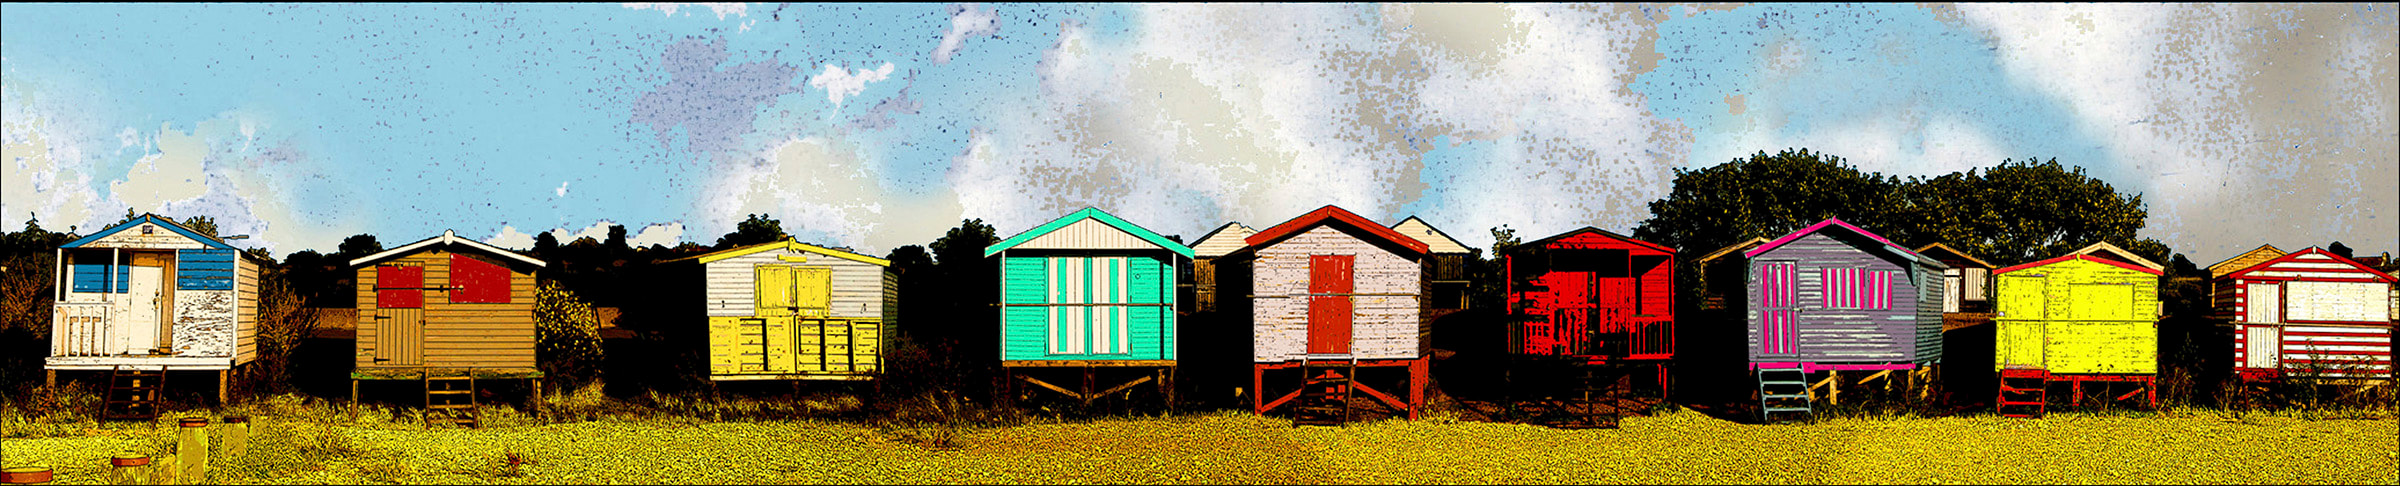 beach huts,whitstable,west beach